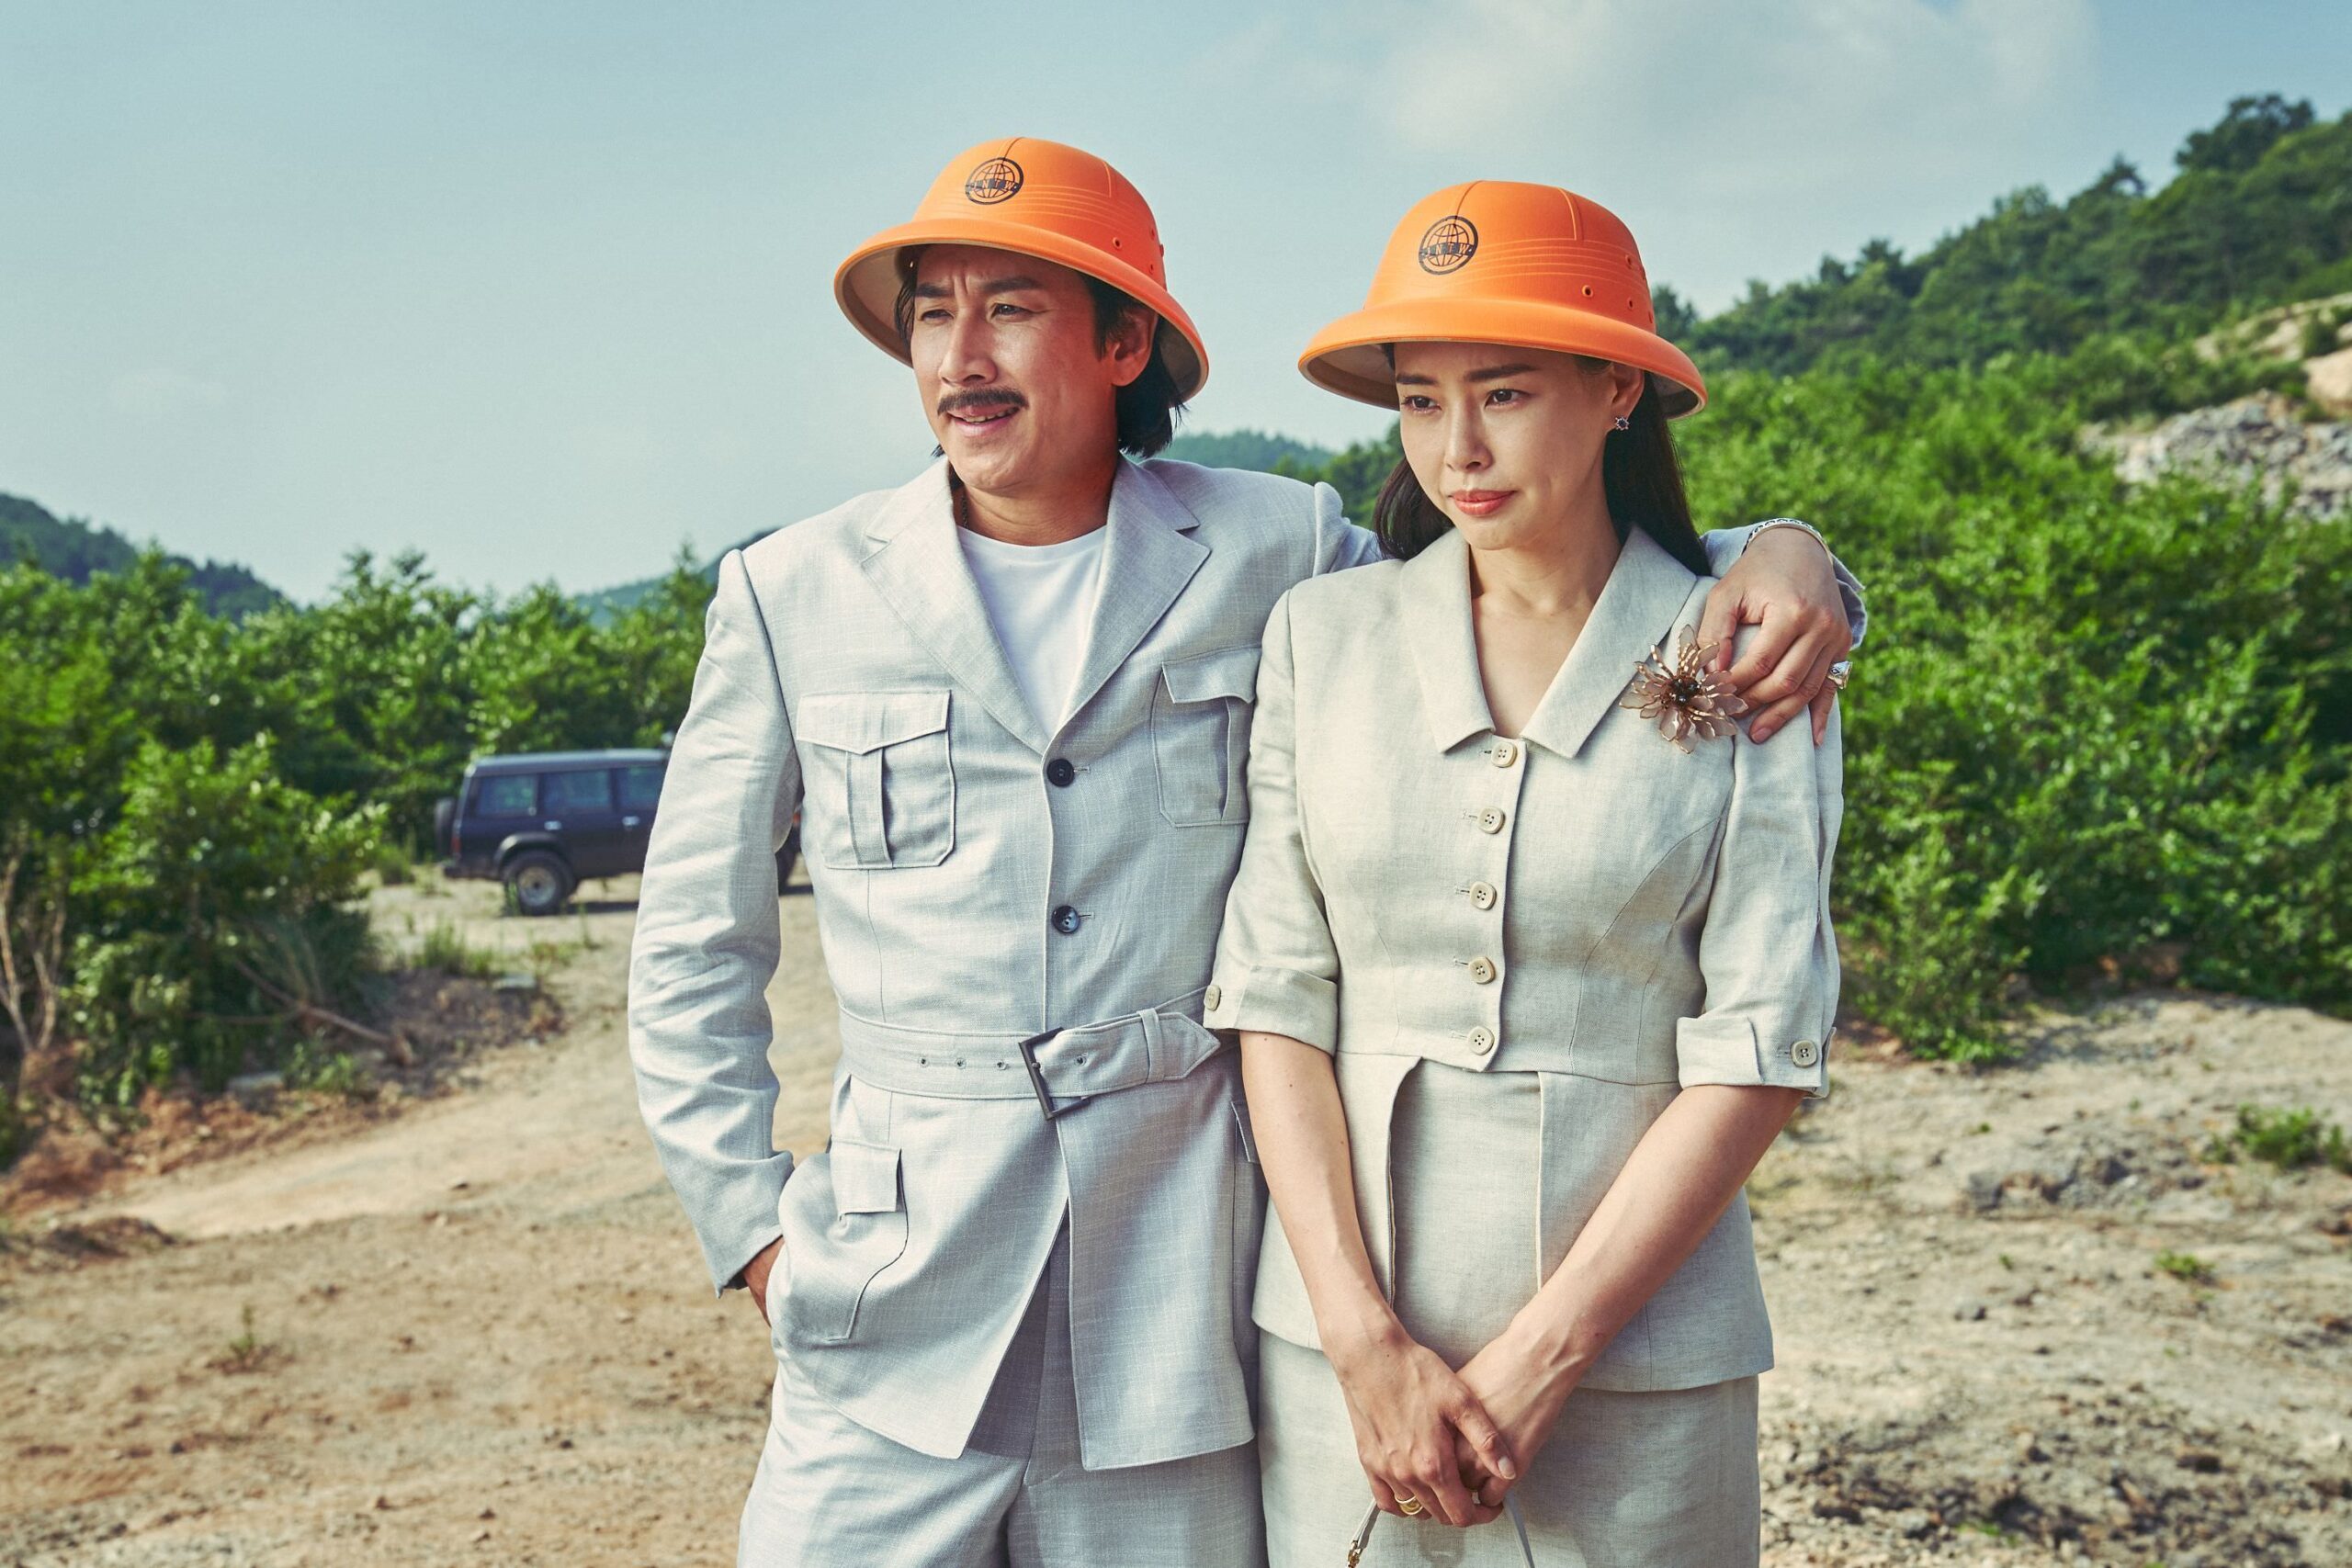 Lee Sun-kyun as Jonathan Na and Lee Ha-nee as Yeo-rae in film, 'Killing Romance'. Photo provided by Fantasia International Film Festival